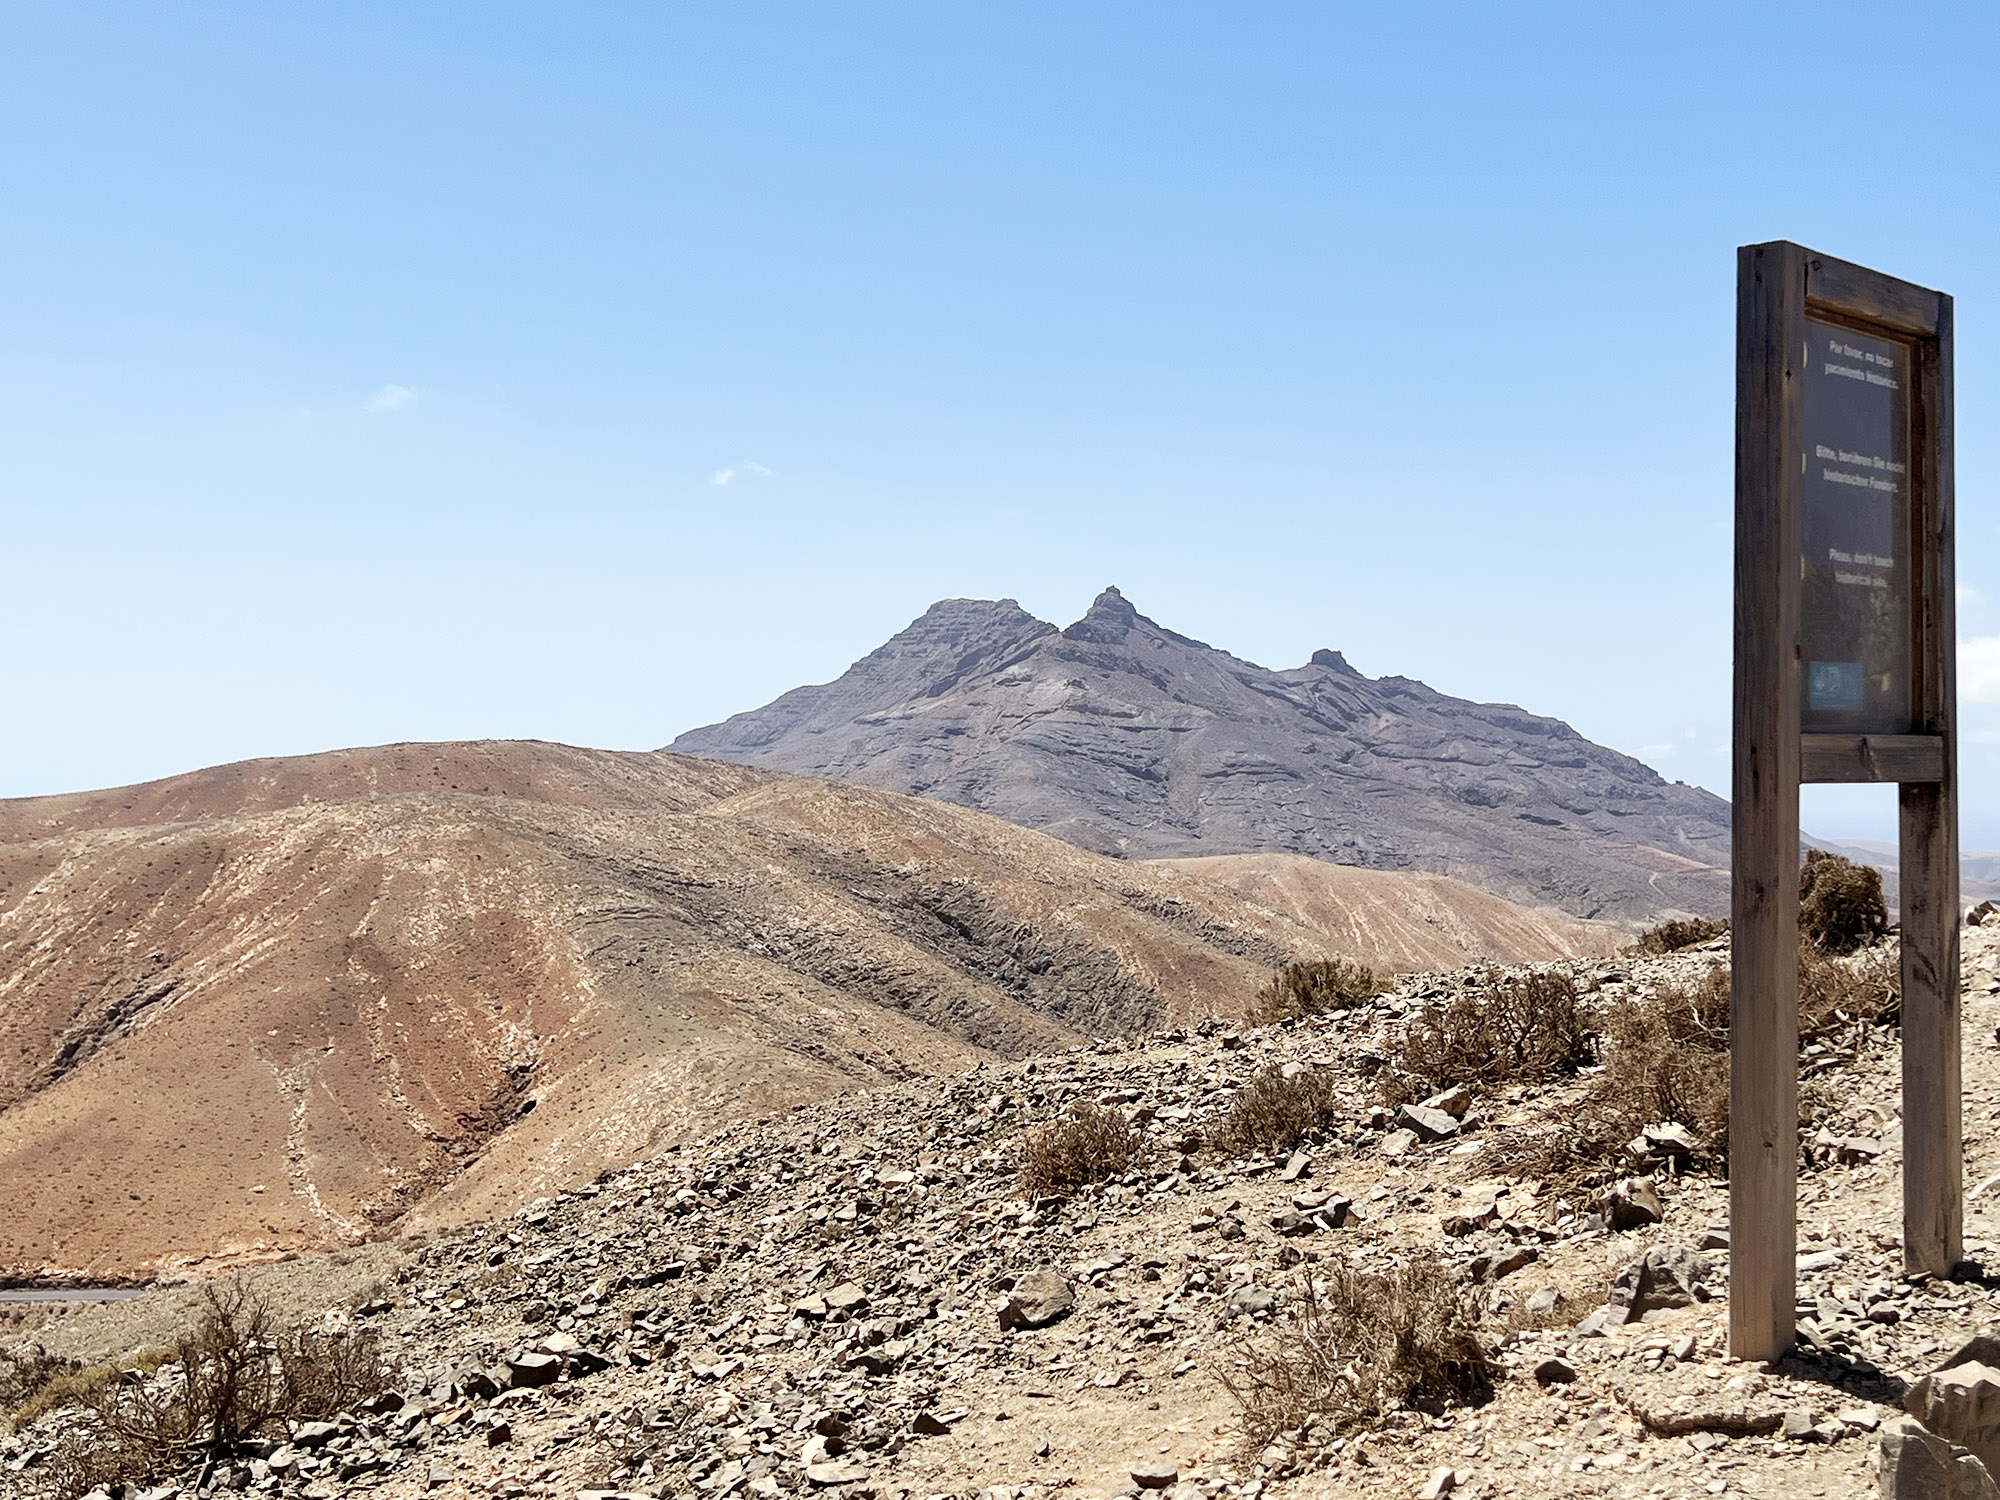 Fuerteventura: Sicasumbre Viewpoint - A short trip from La Pared